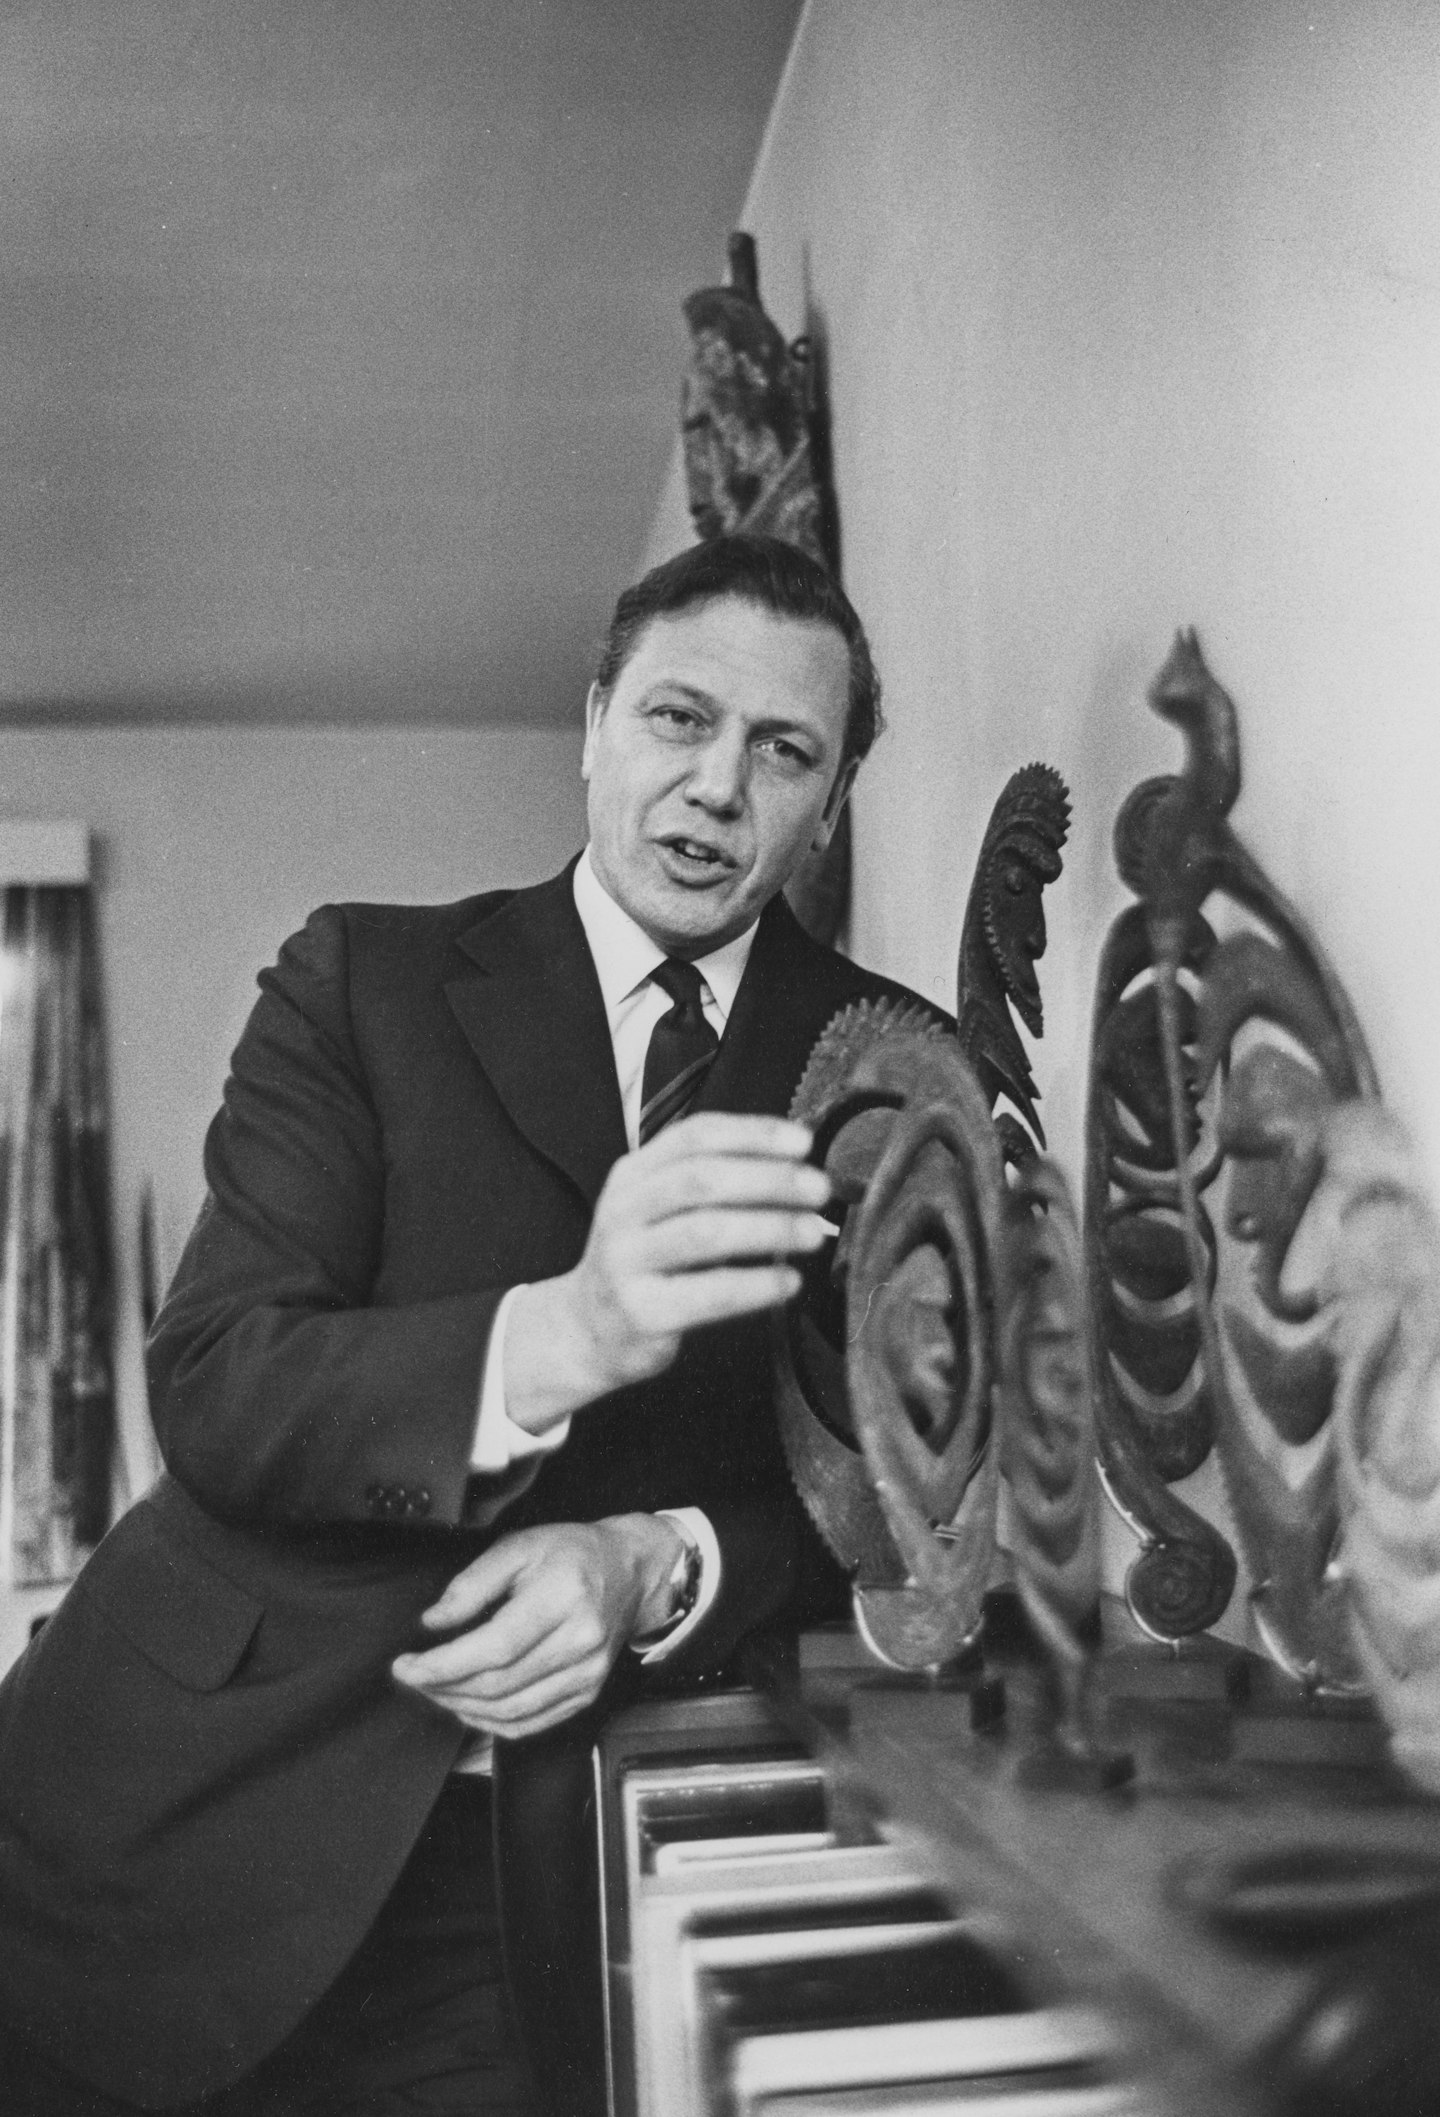 David Attenborough in 1972